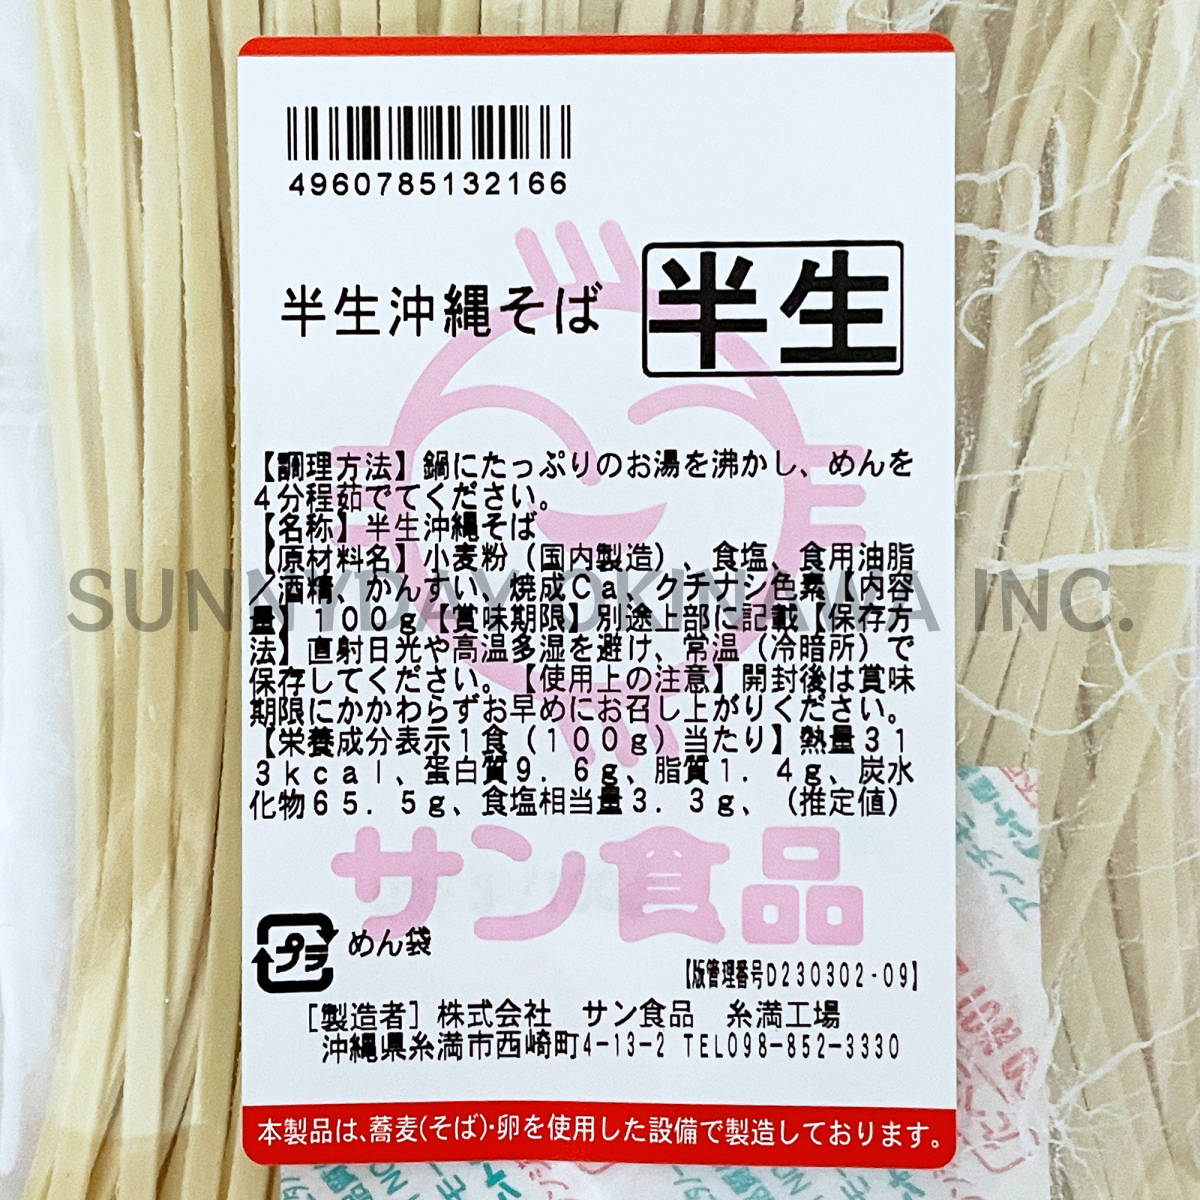  Okinawa соба половина сырой лапша 6 еда свинья . соба суп солнечный еда so-ki рагу рафуте . земля производство ваш заказ 